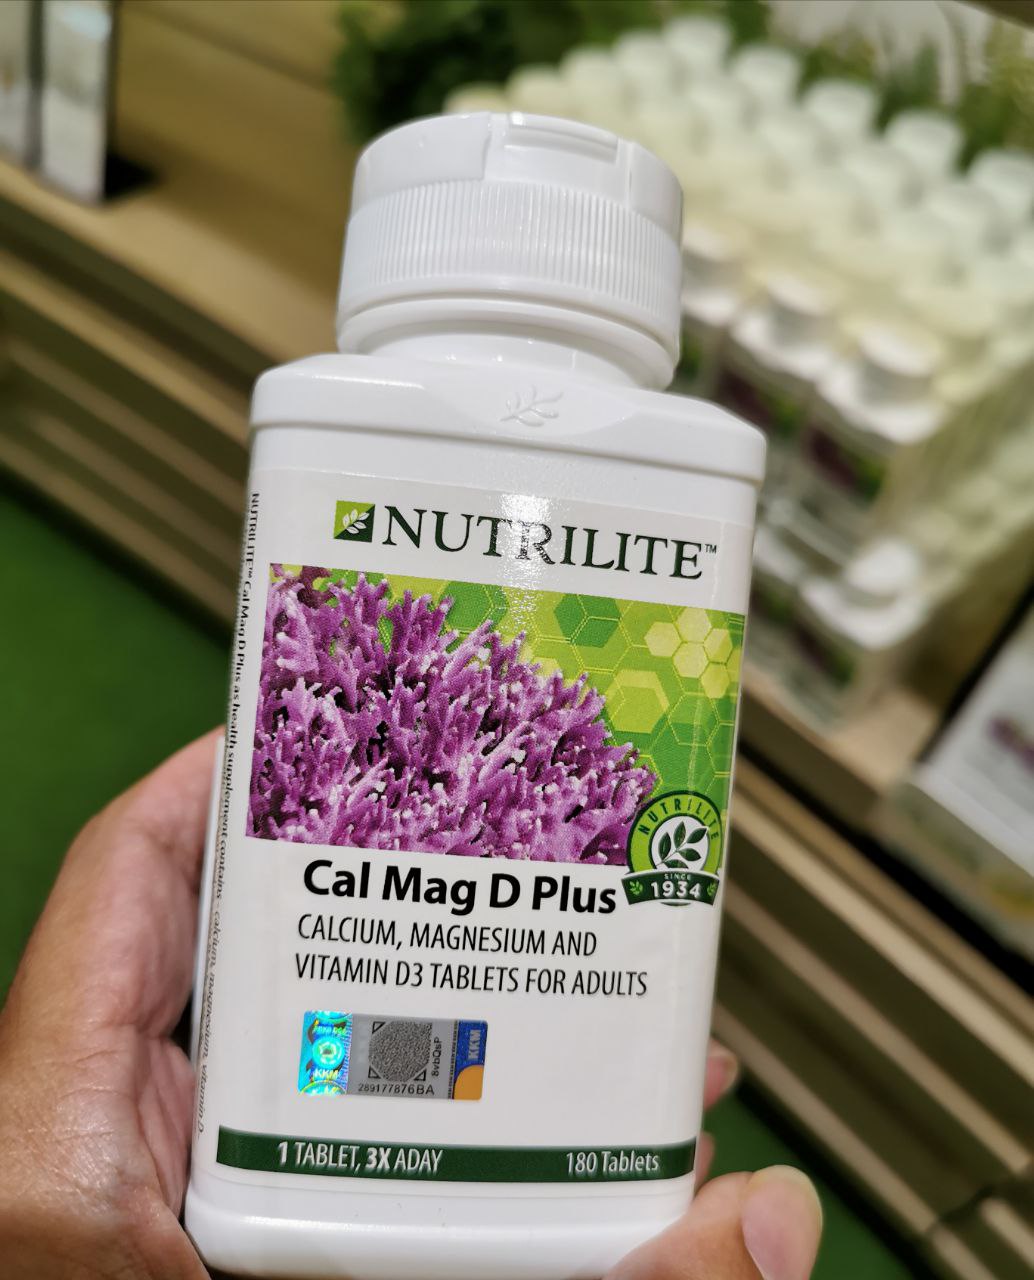 Supplemen Nutrilite Cal Mag D Plus untuk gastrik?